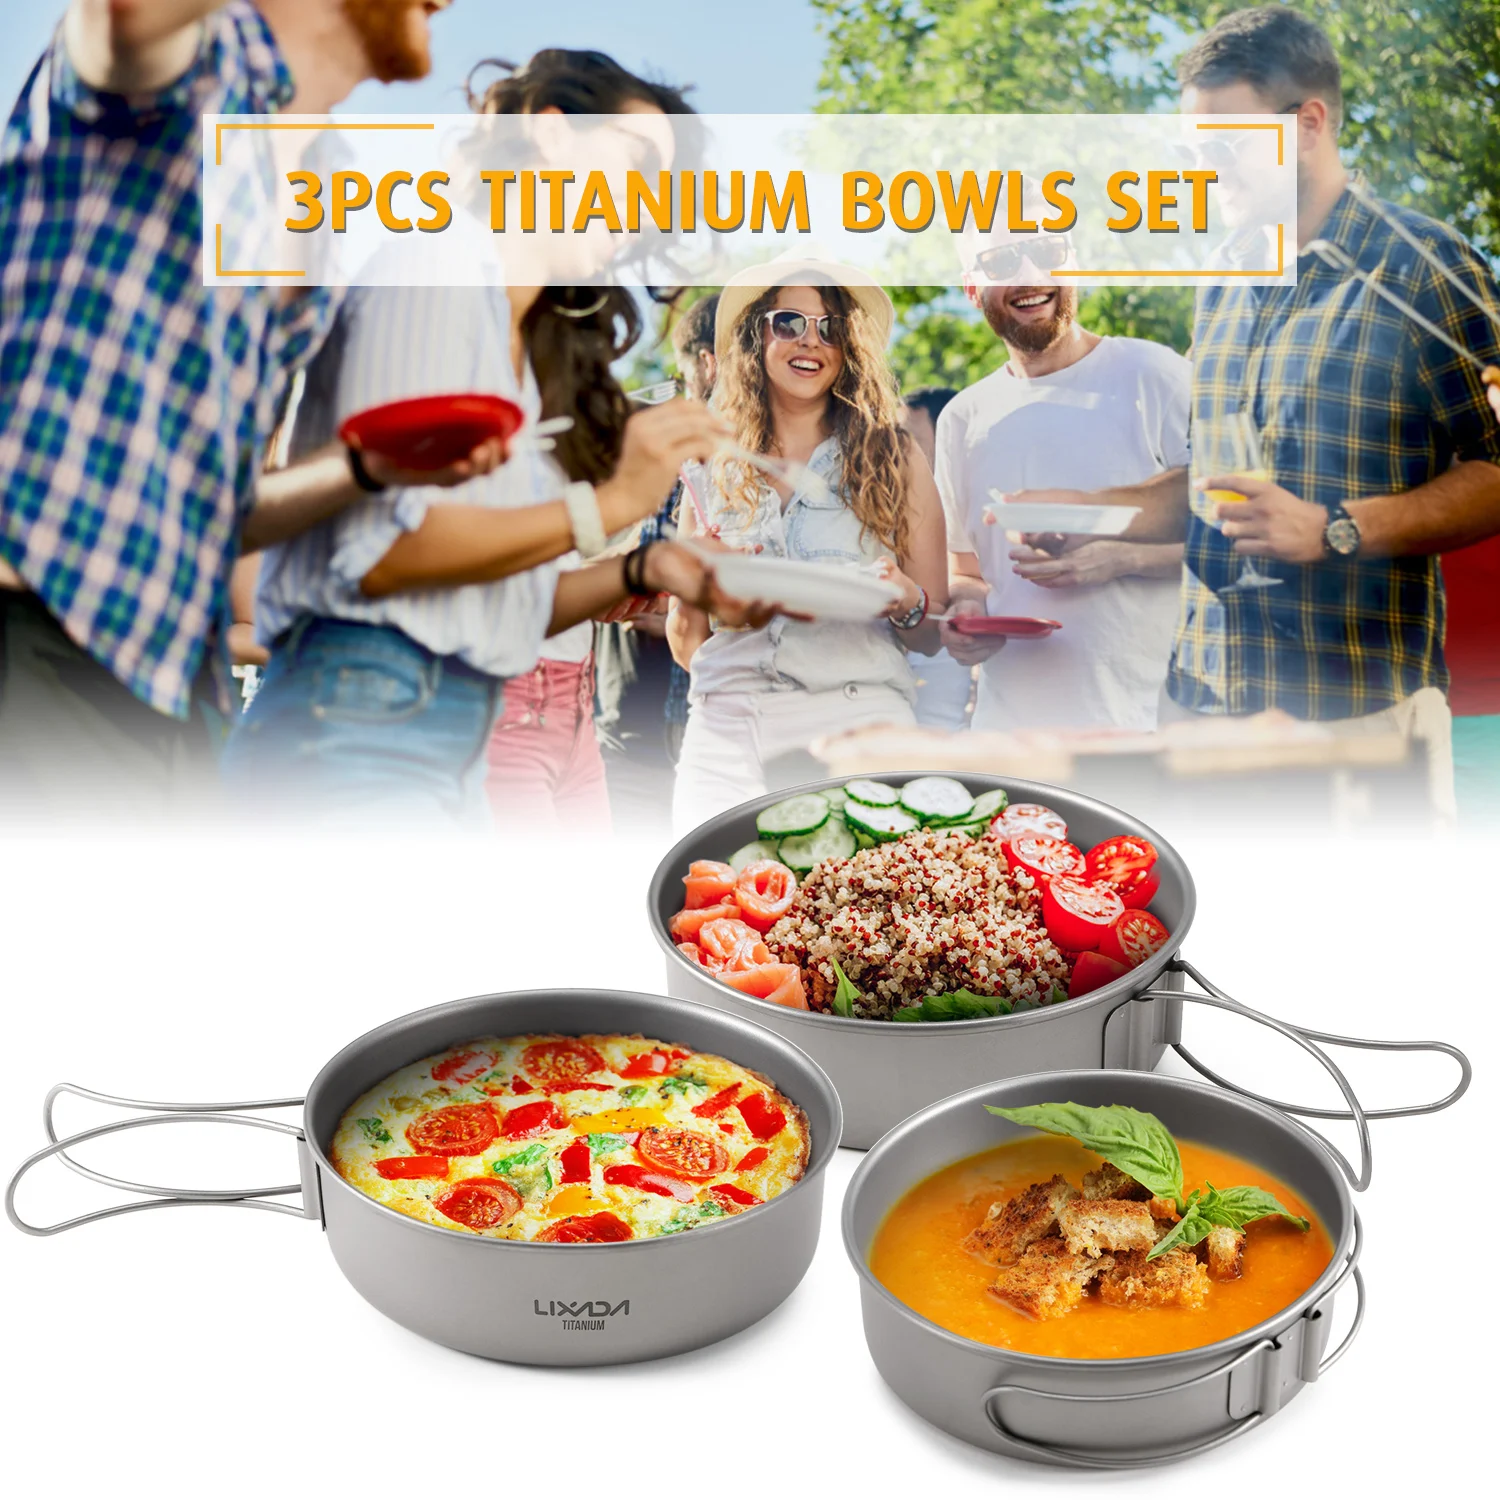 

Lixada 3pcs Titanium Bowls Set Ultralight Titanium Dinner Bowl Pan with Foldable Handles for Outdoor Camping Hiking Picnic